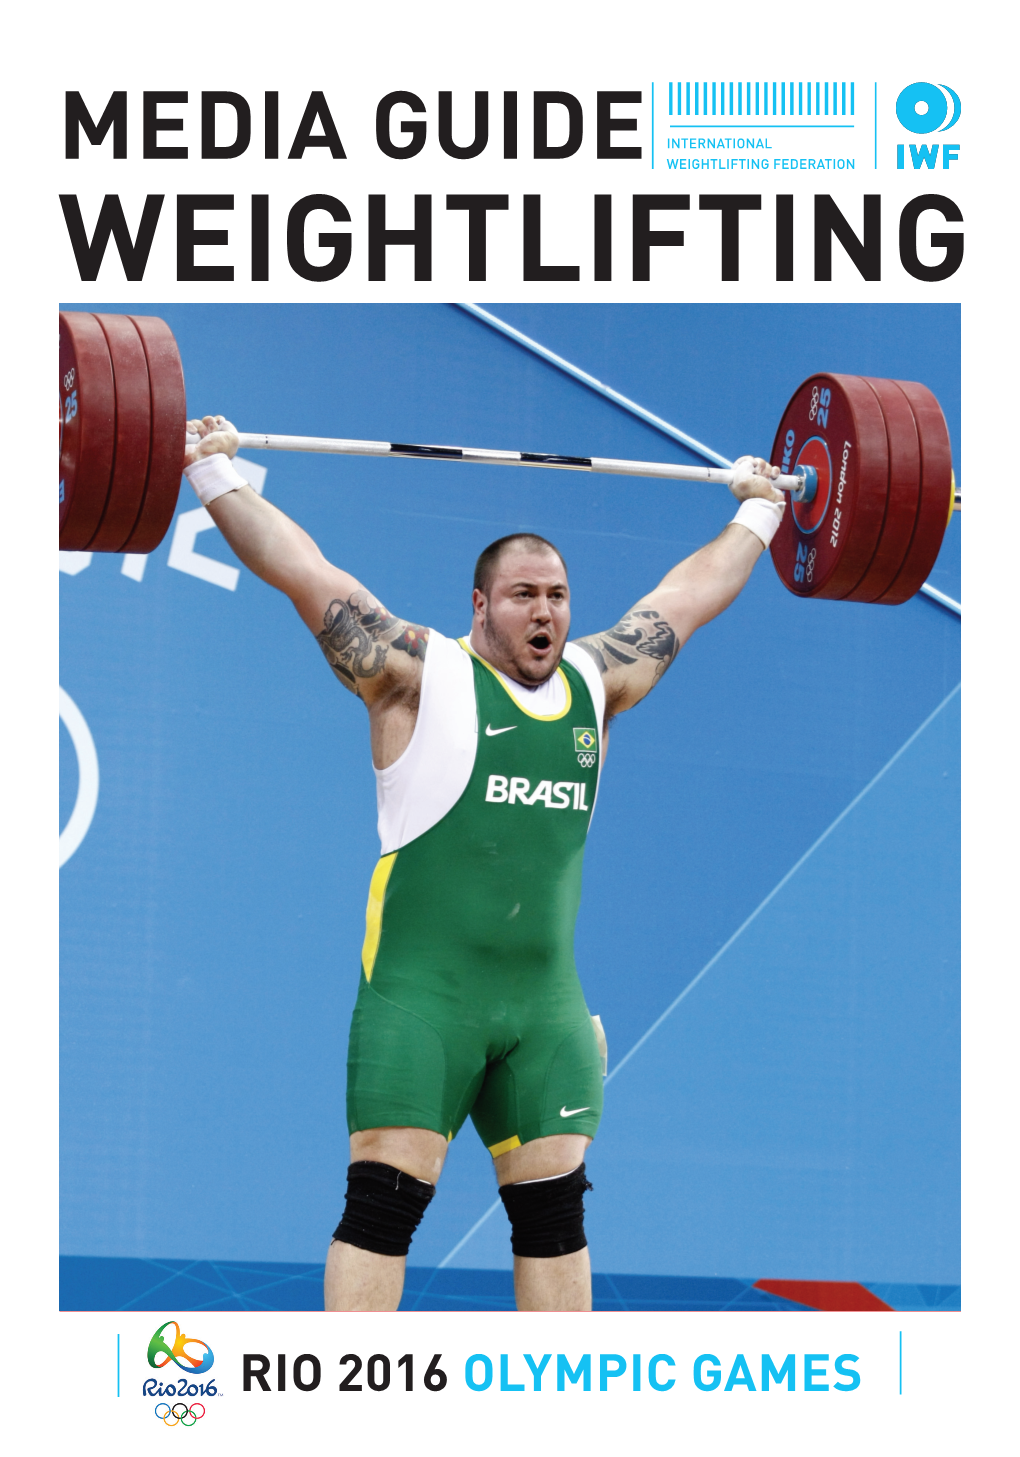 Media Guide Weightlifting Federation Weightlifting